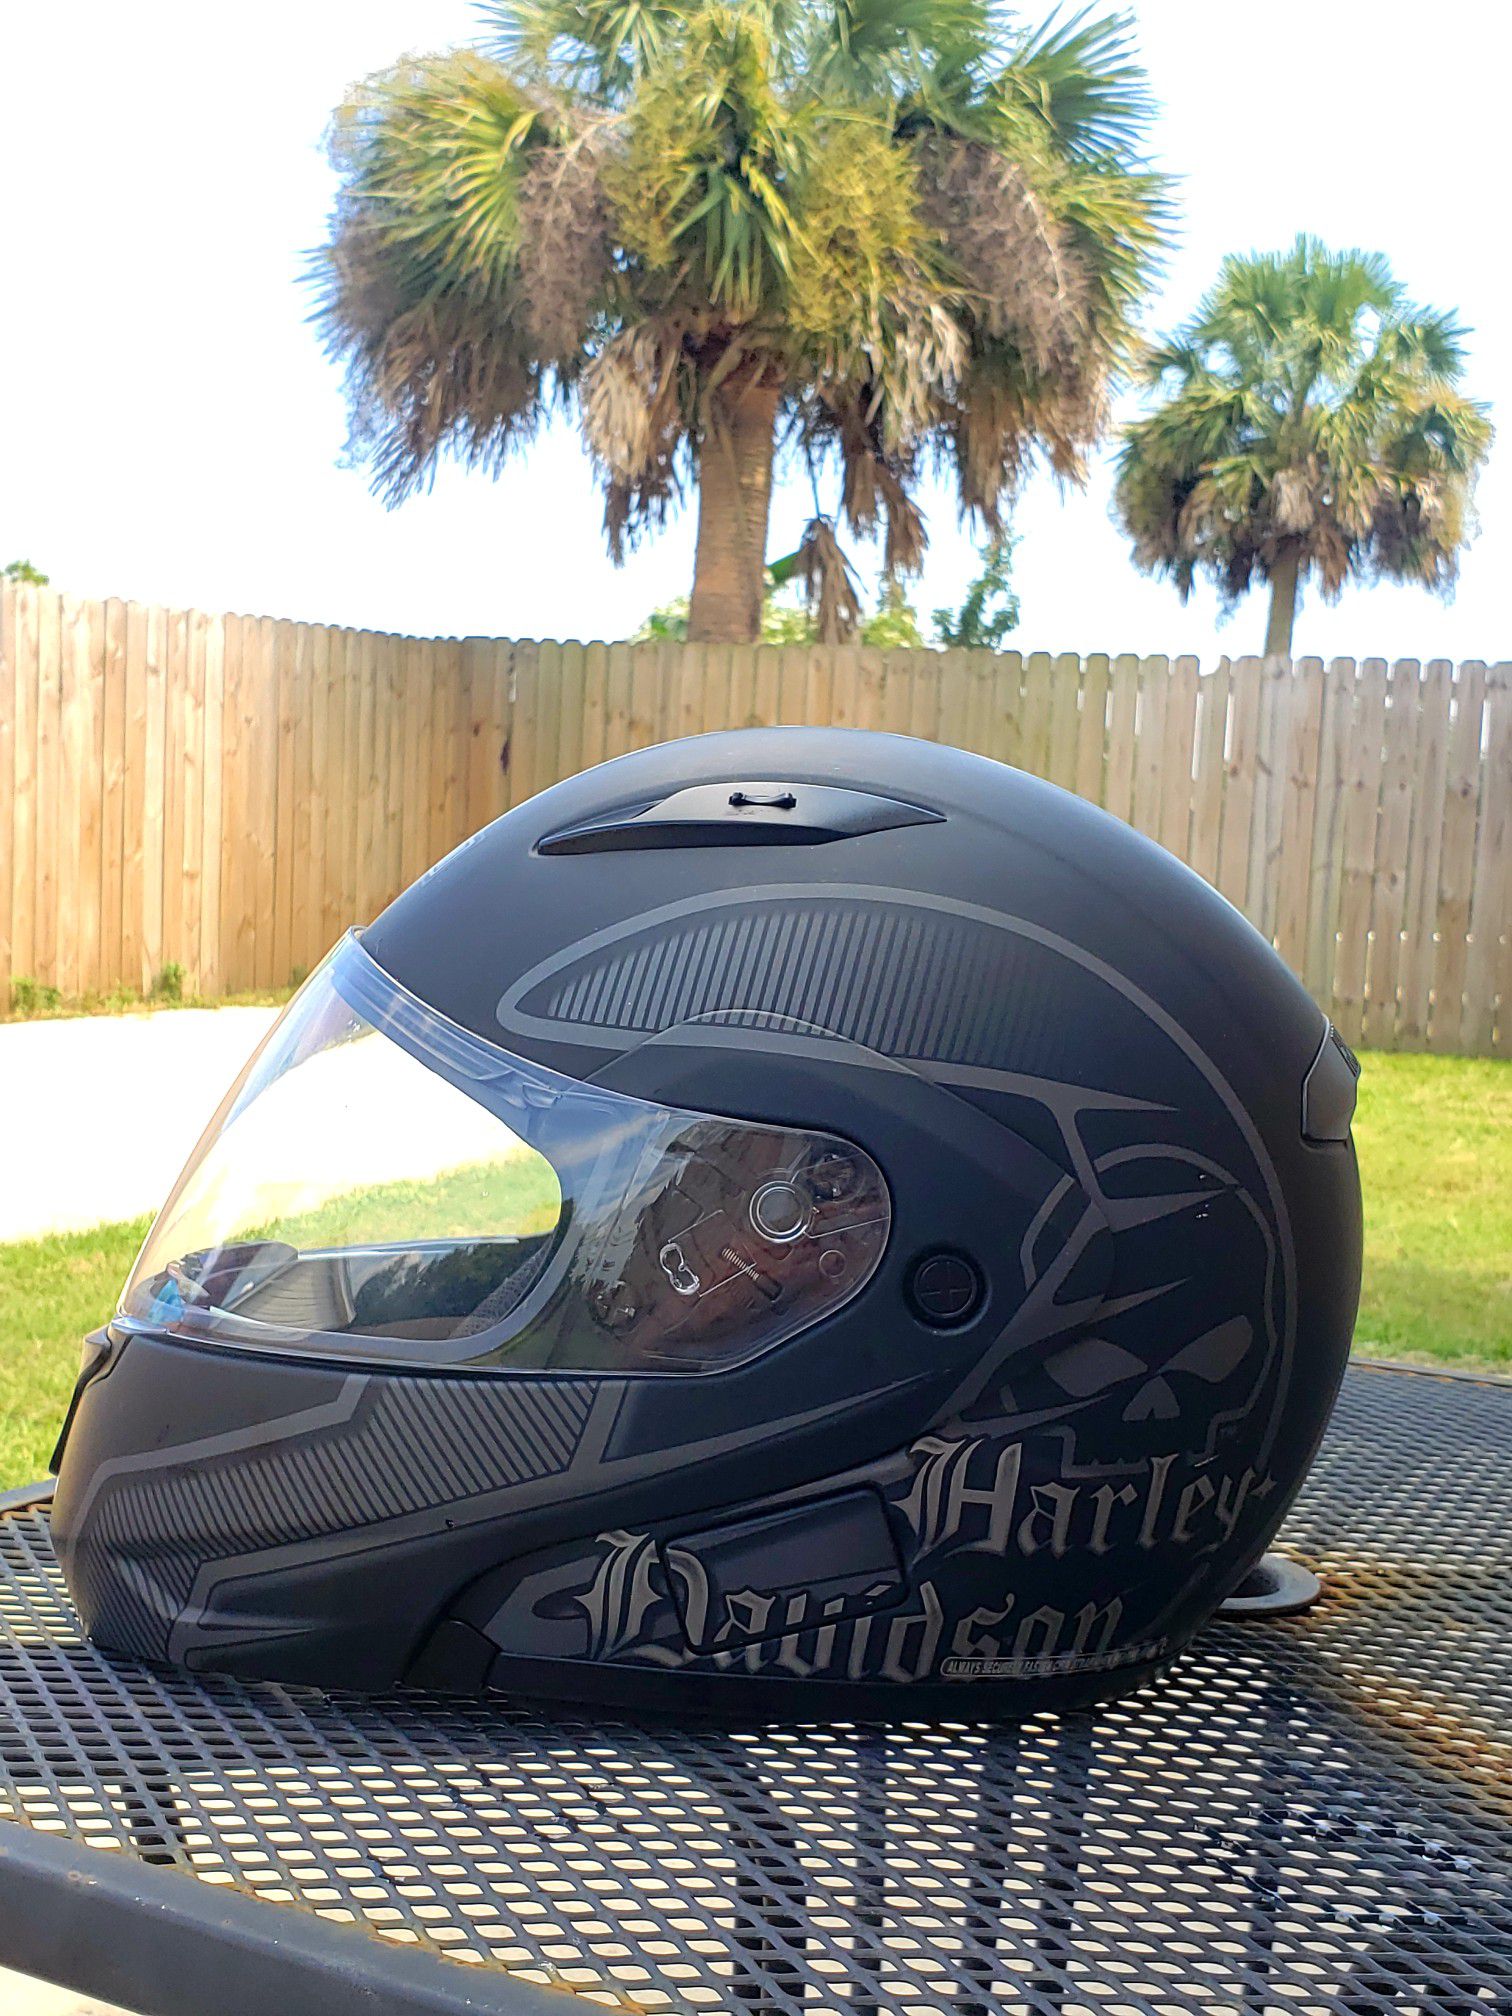 Genuine Harley Davidson Helmet